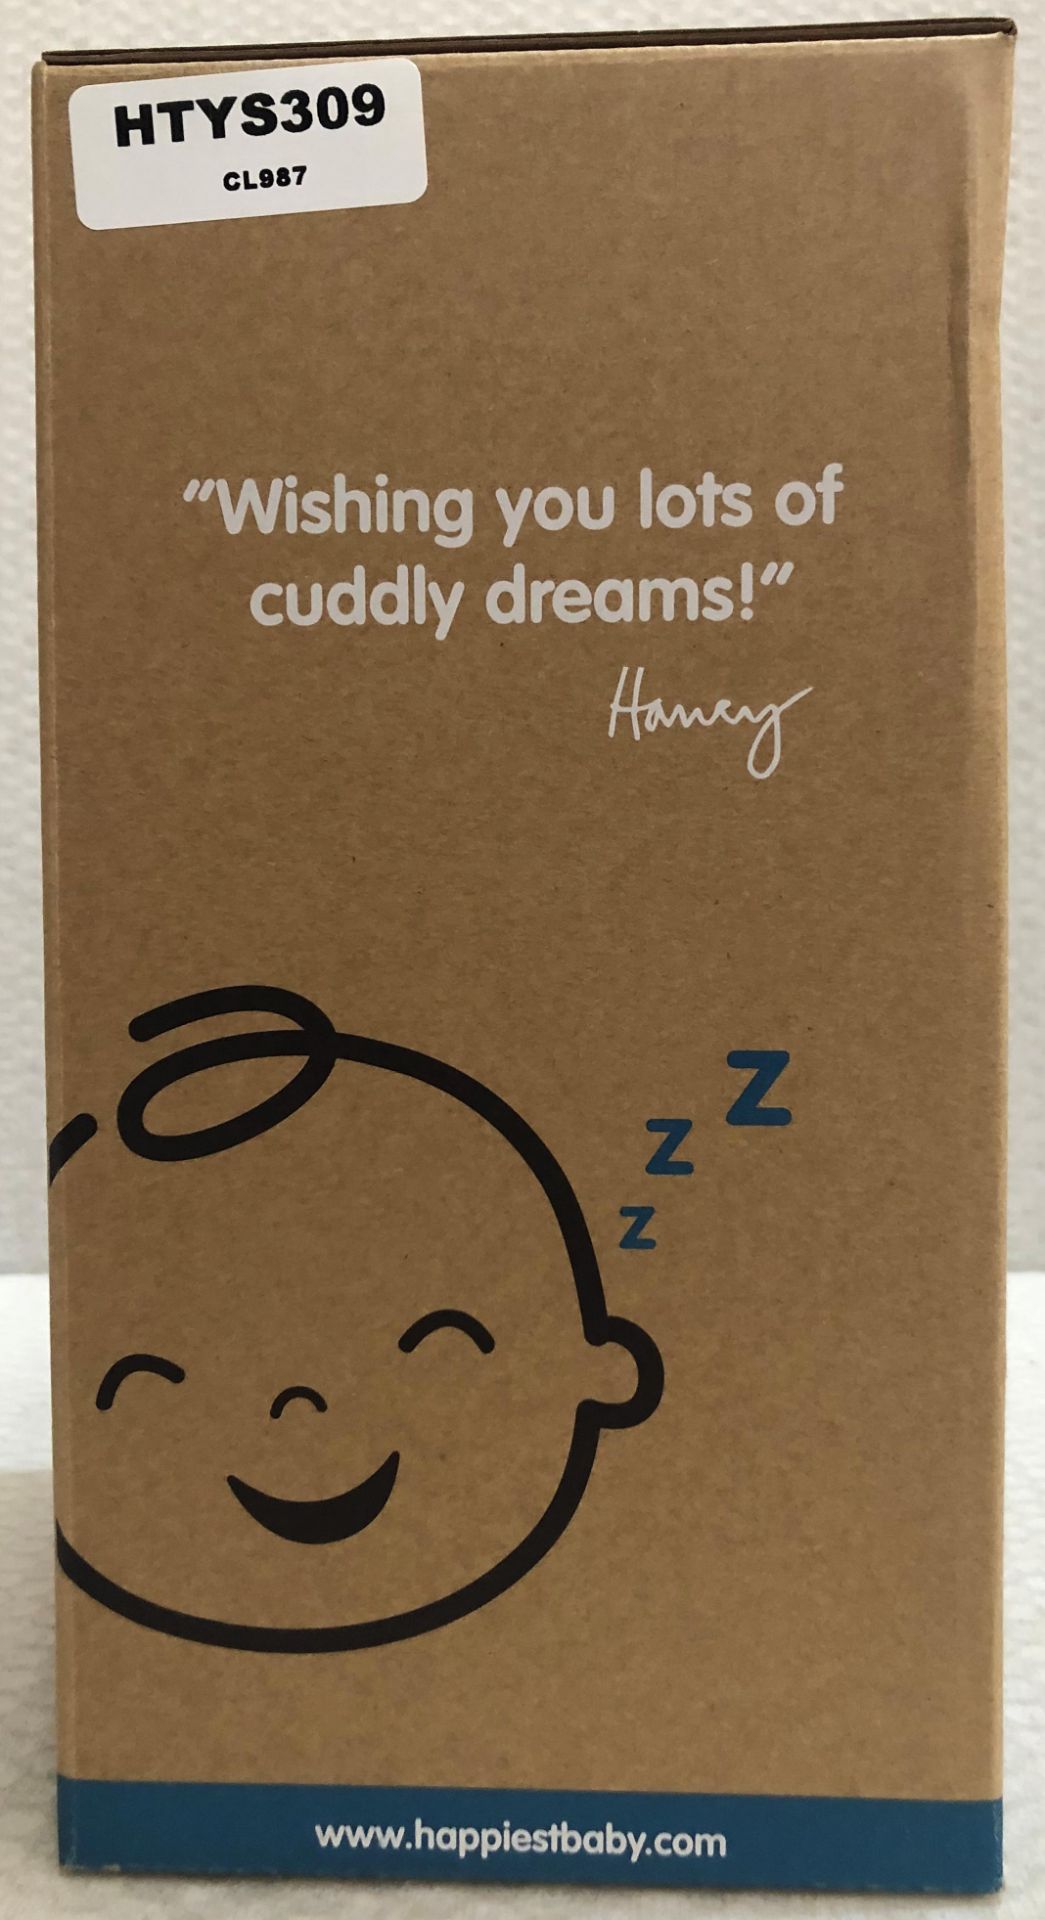 1 x Happiest Baby Snoobear Sleep Aid - New/Boxed - HTYS309 - CL987 - Location: Altrincham WA14 - - Image 5 of 6